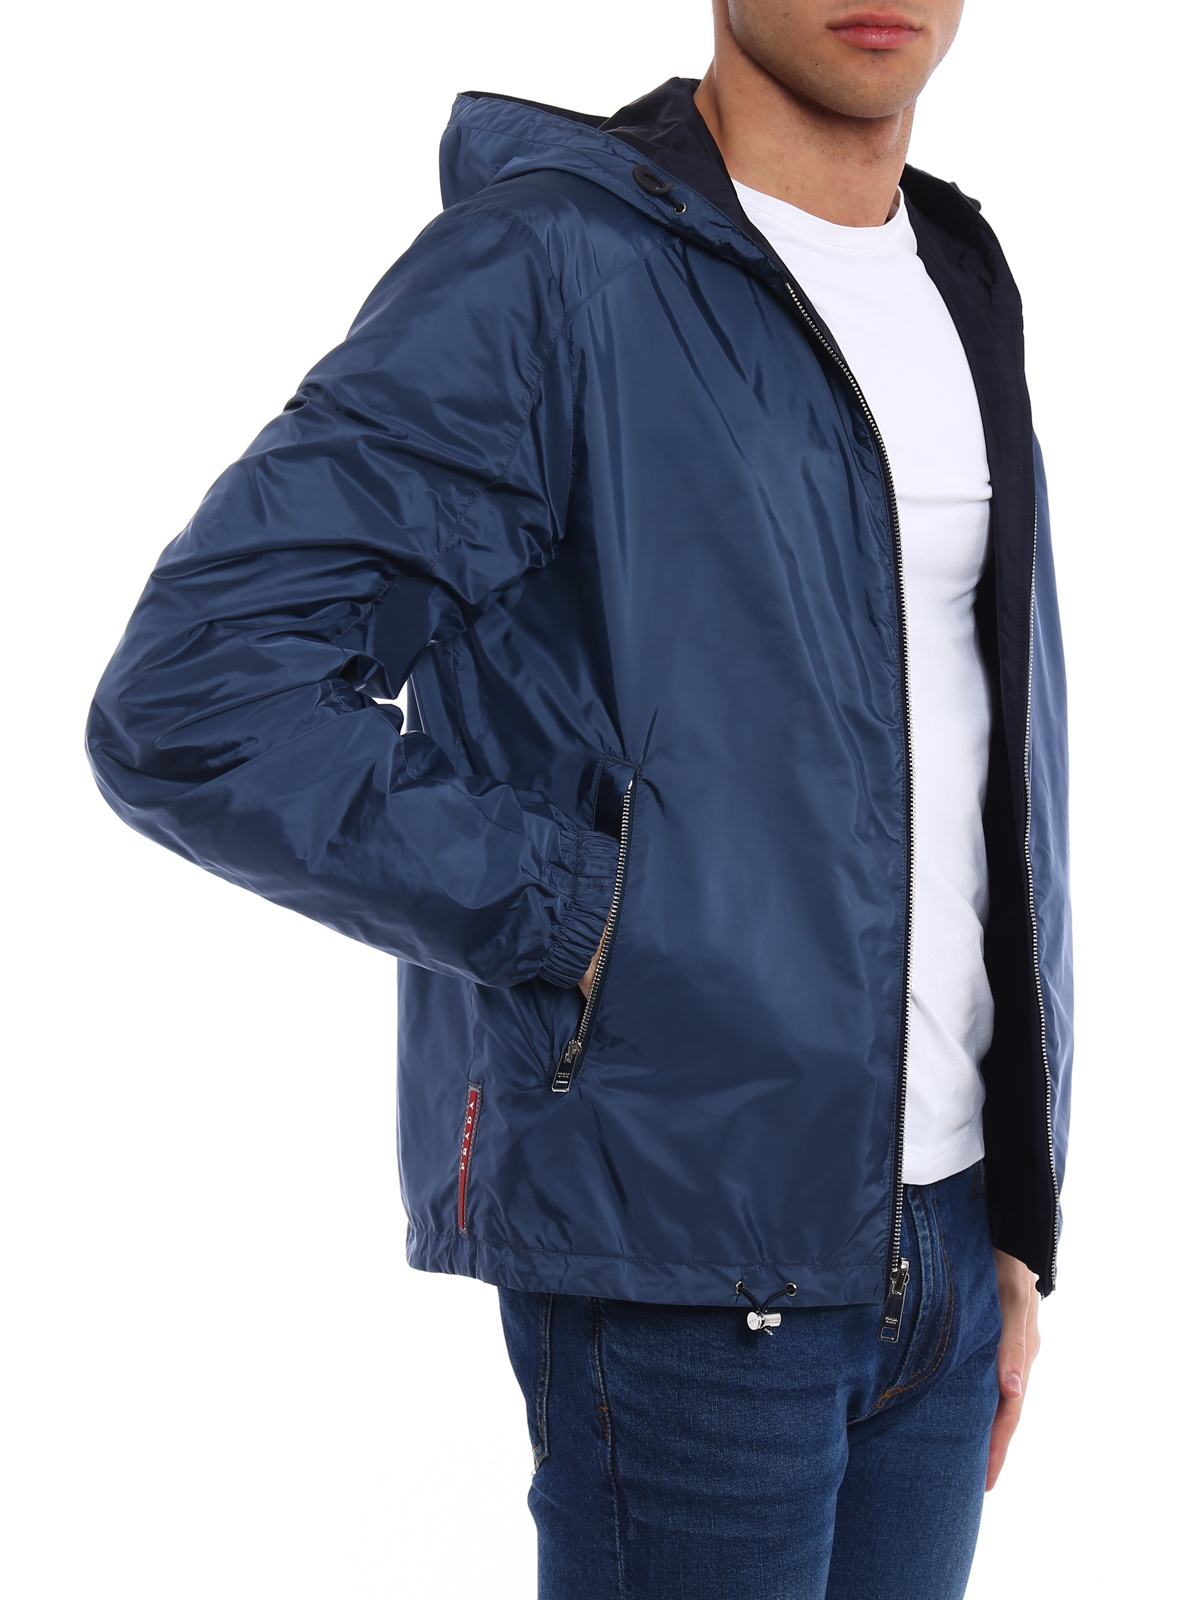 blue hooded jacket - casual jackets 